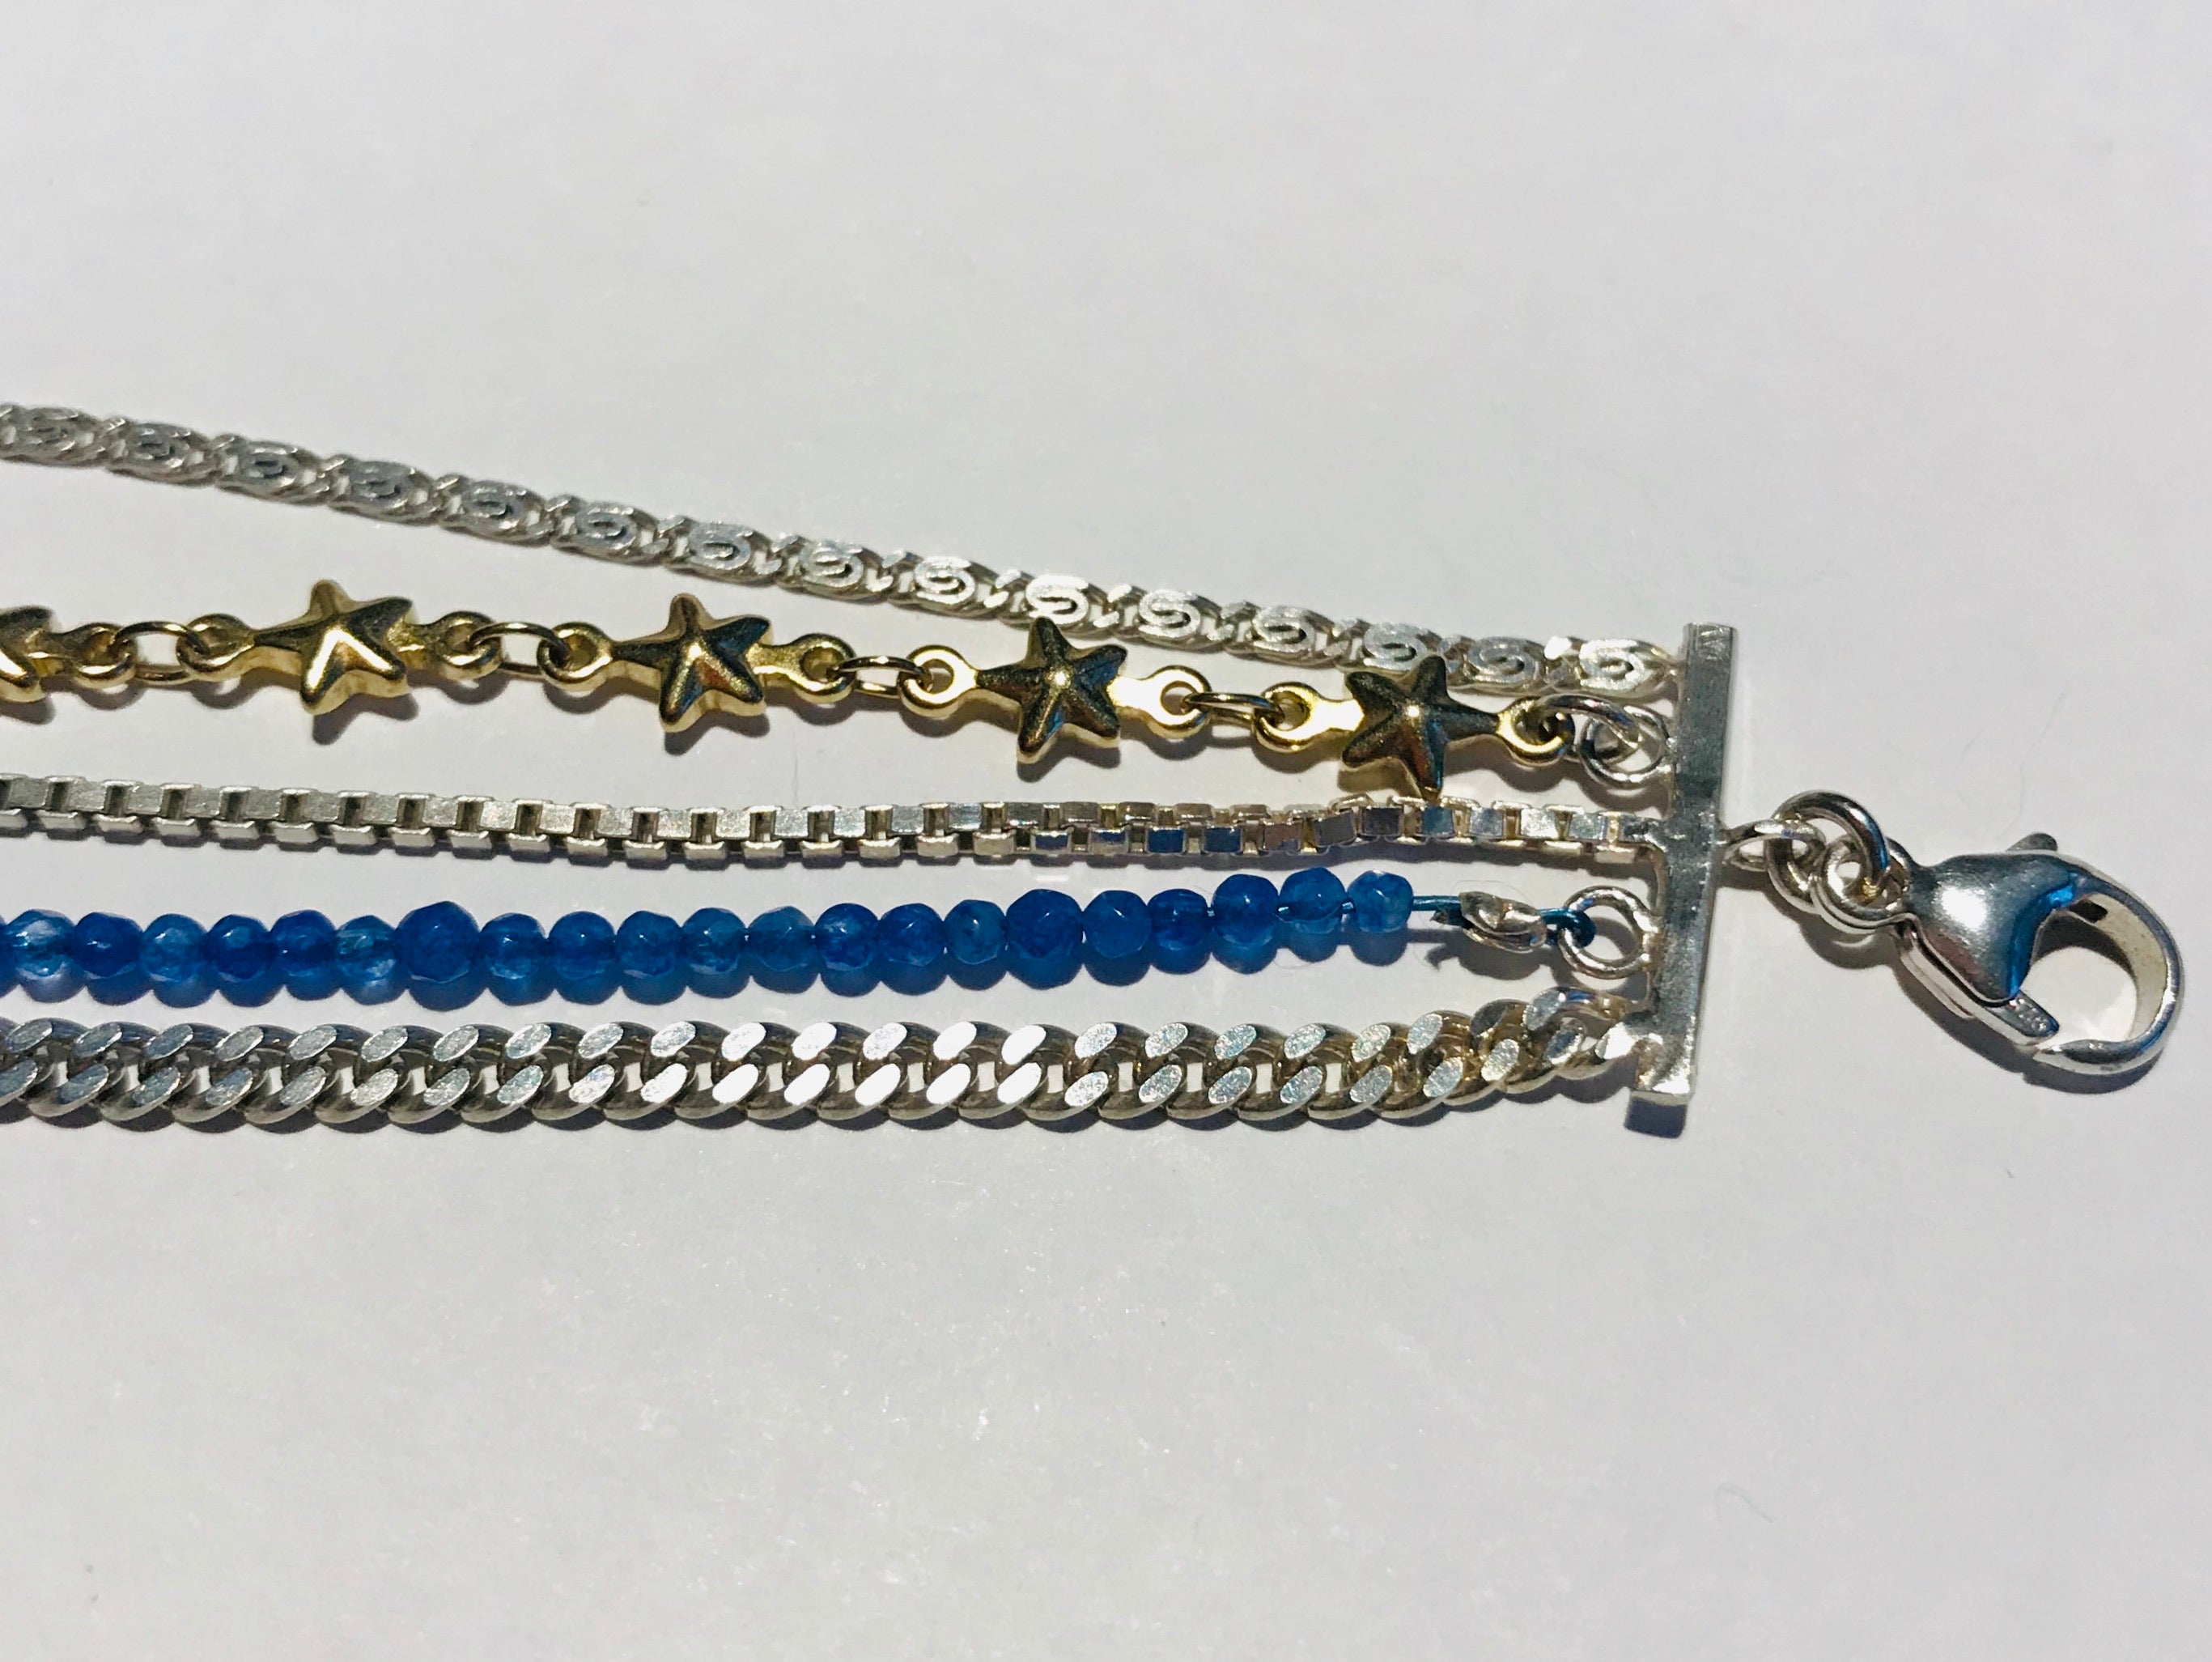 Atelier Elf silver bracelet with blue semiprecious stones